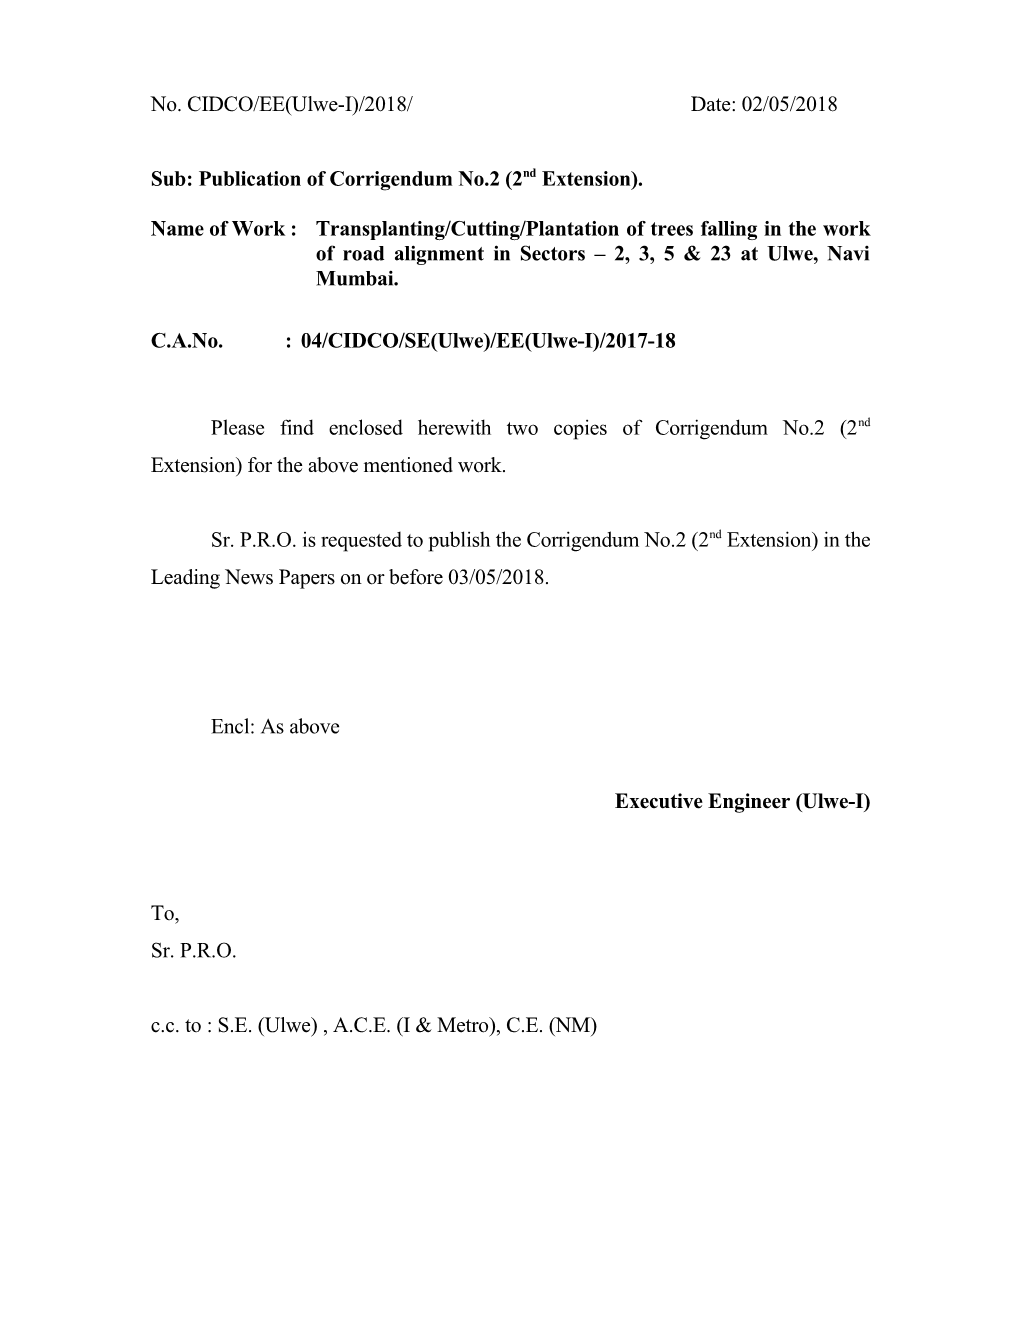 Sub: Publication of Corrigendum No.2 (2Ndextension)